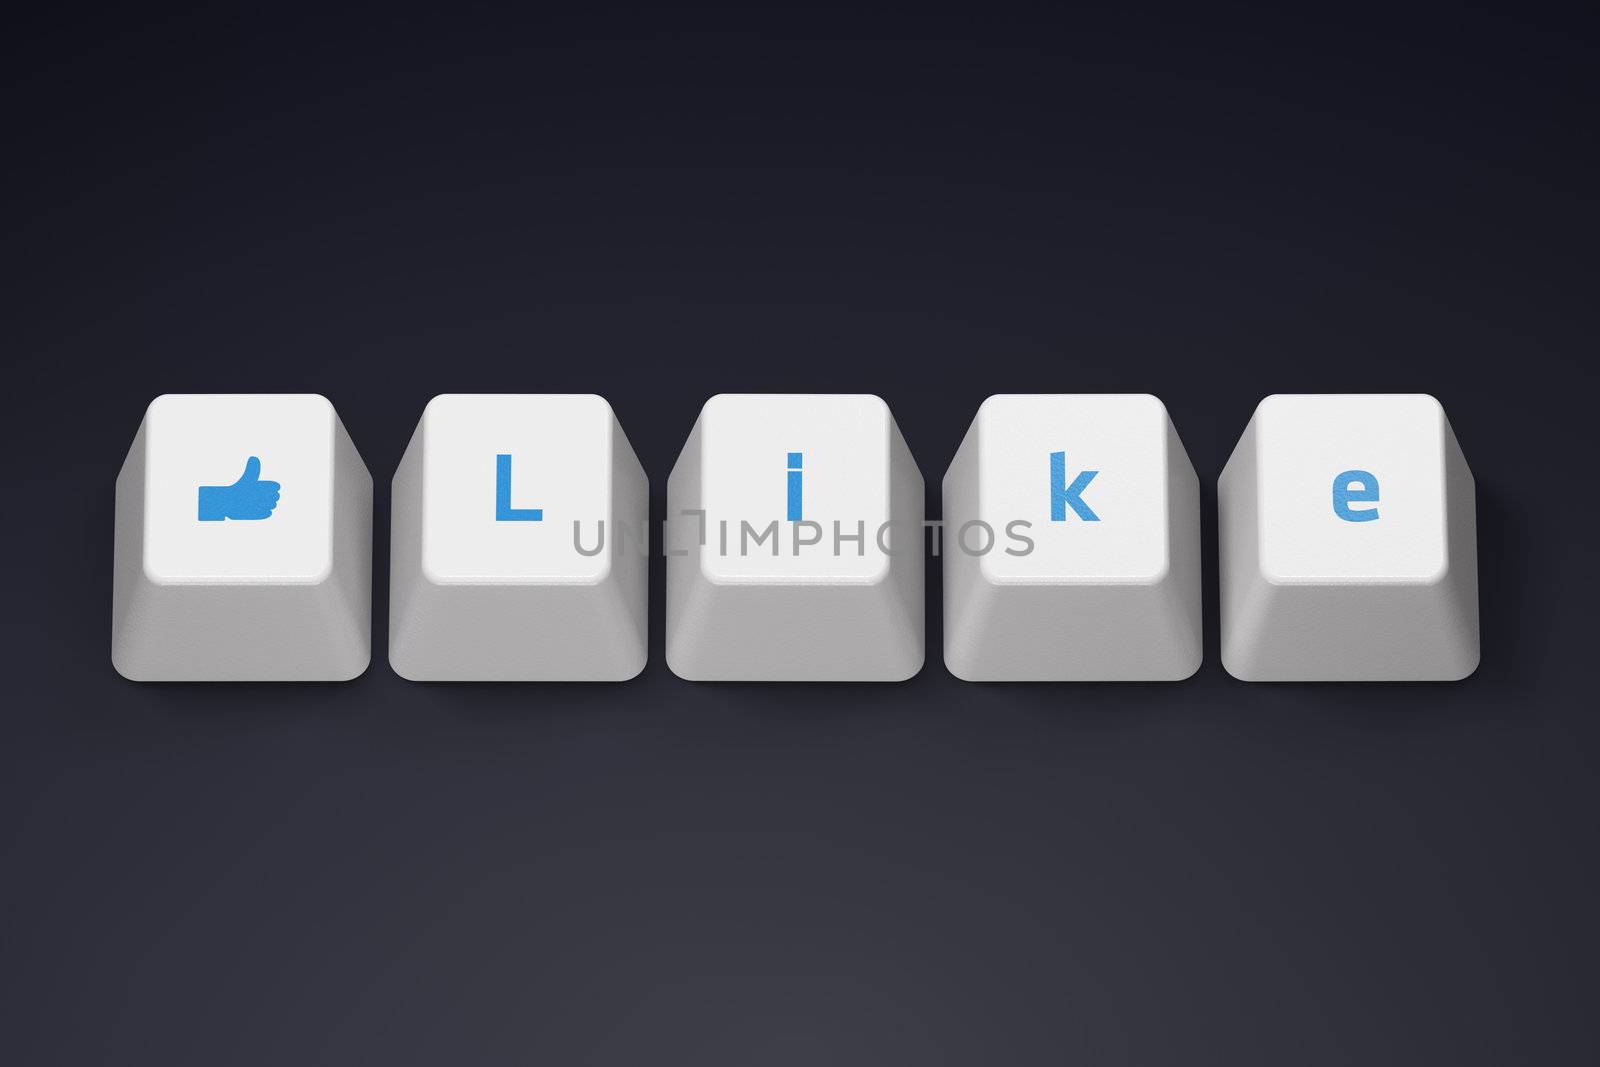 Keyboard's Like buttons by maxkabakov